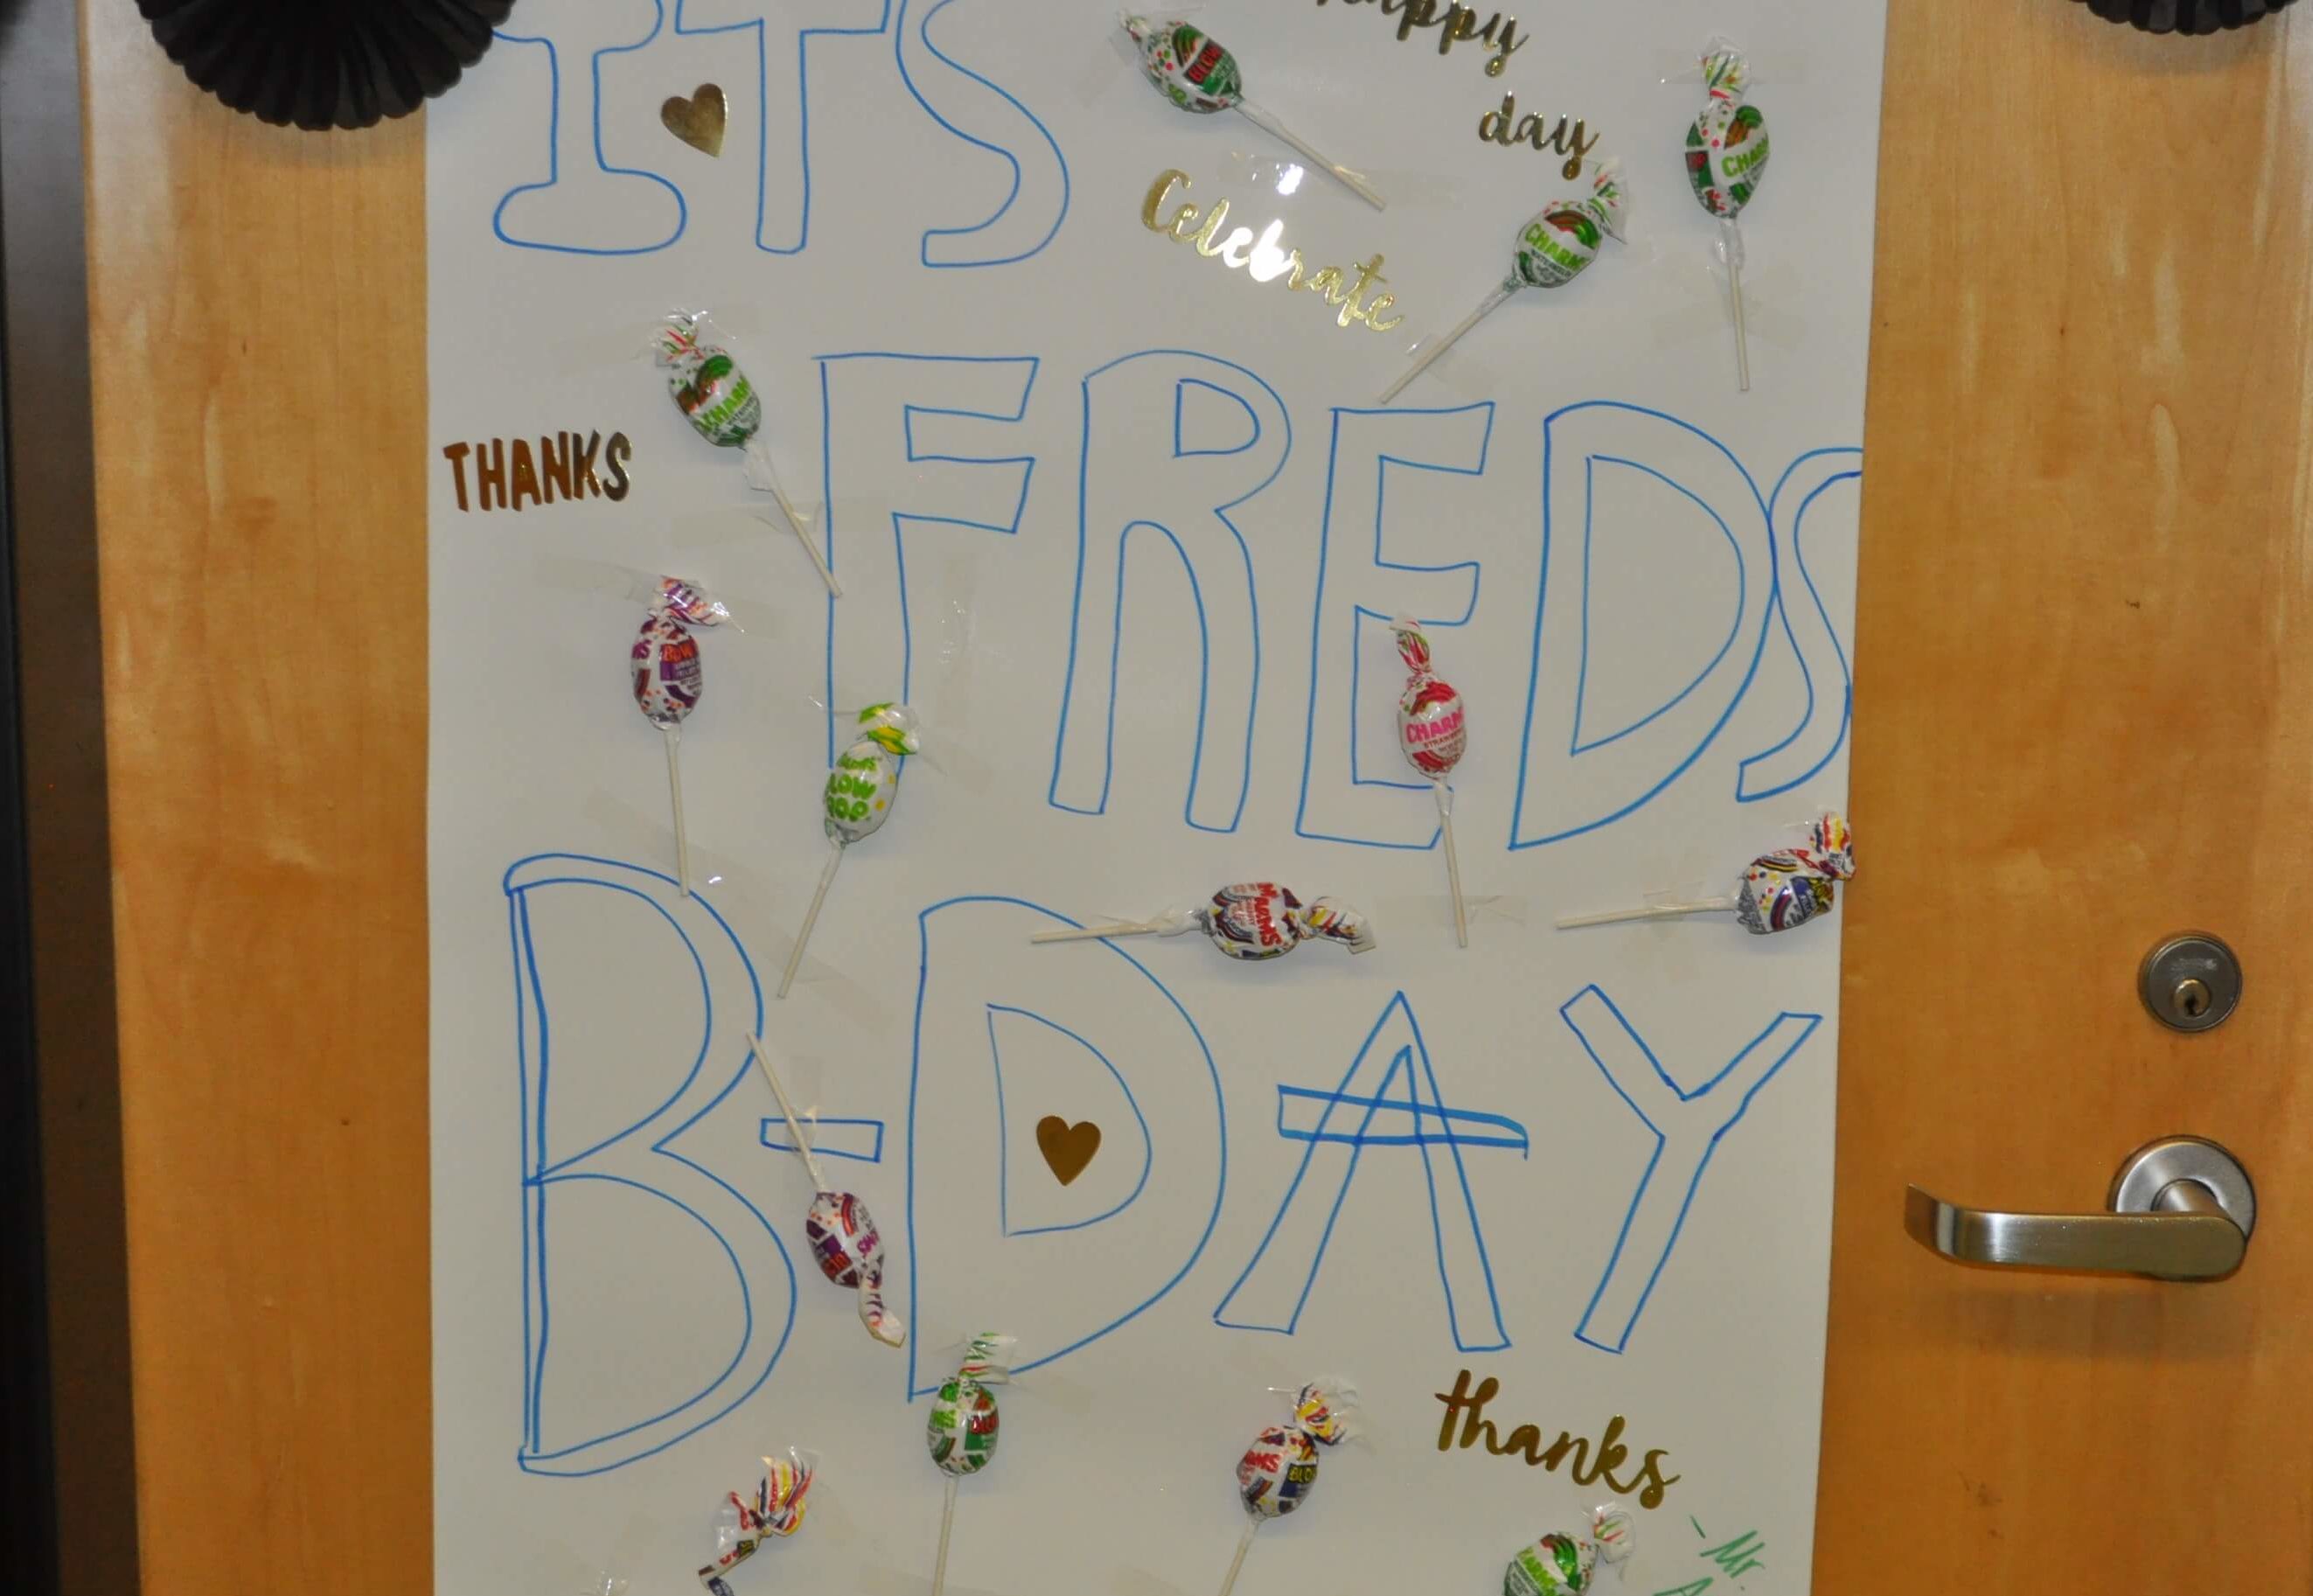 Fred’s 75th Birthday!